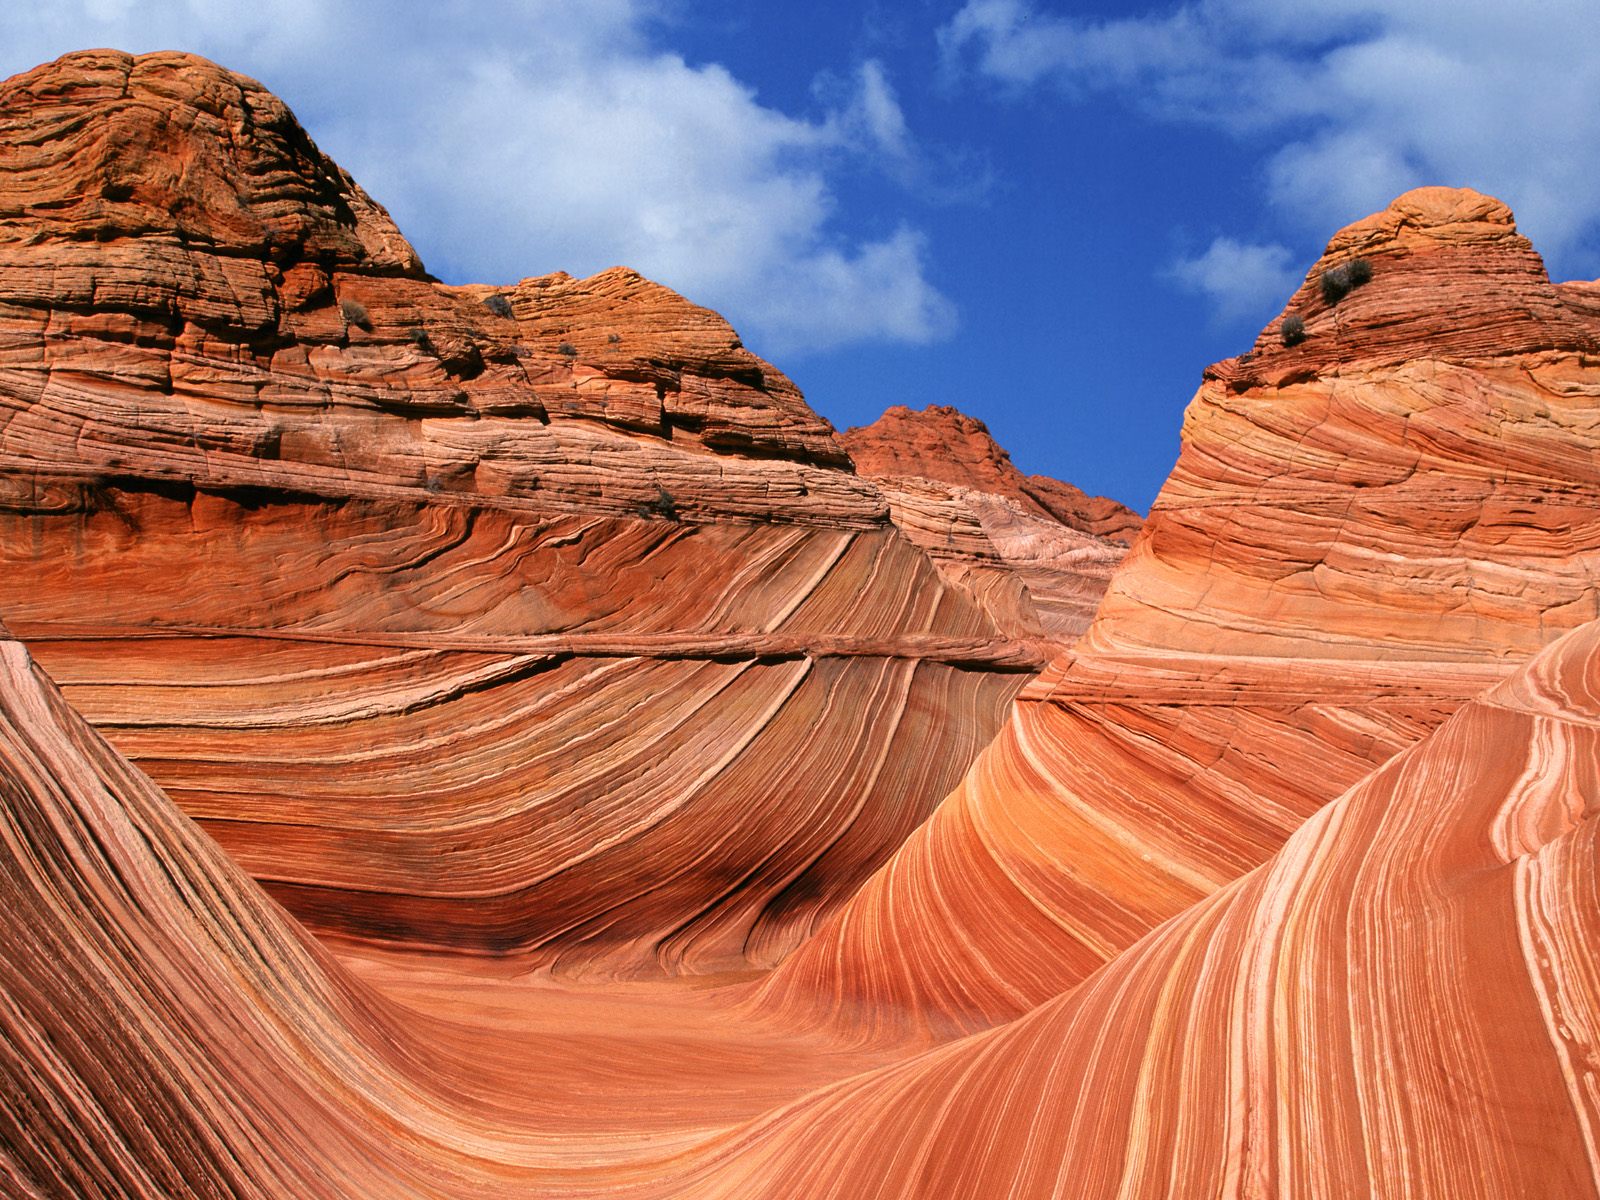  Wilderness Area Arizona   Arizona Photography Desktop Wallpapers 1600x1200